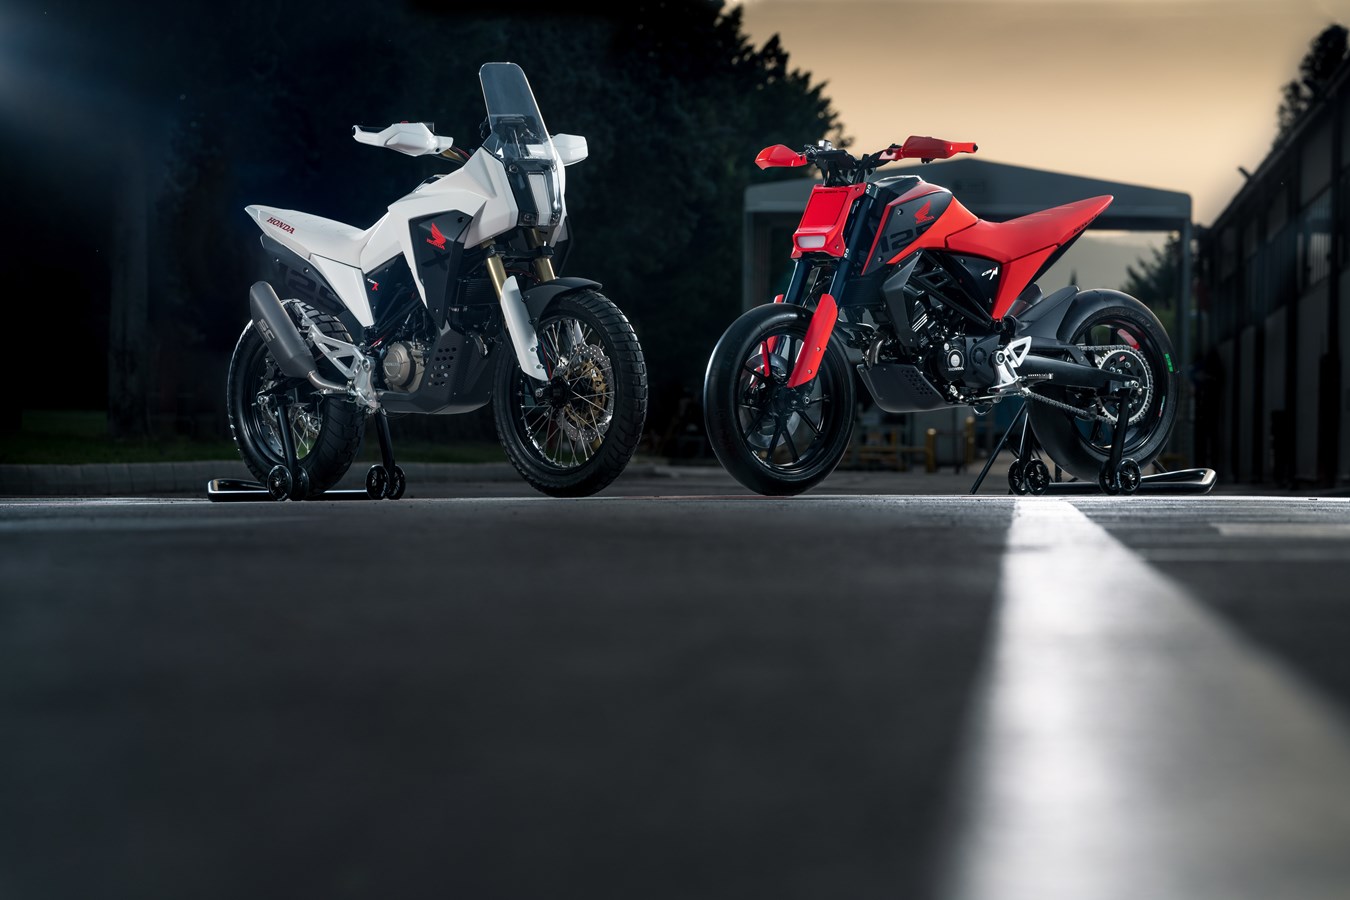 Honda S Rome R D Centre Brings Two 125cc Design Studies To Eicma